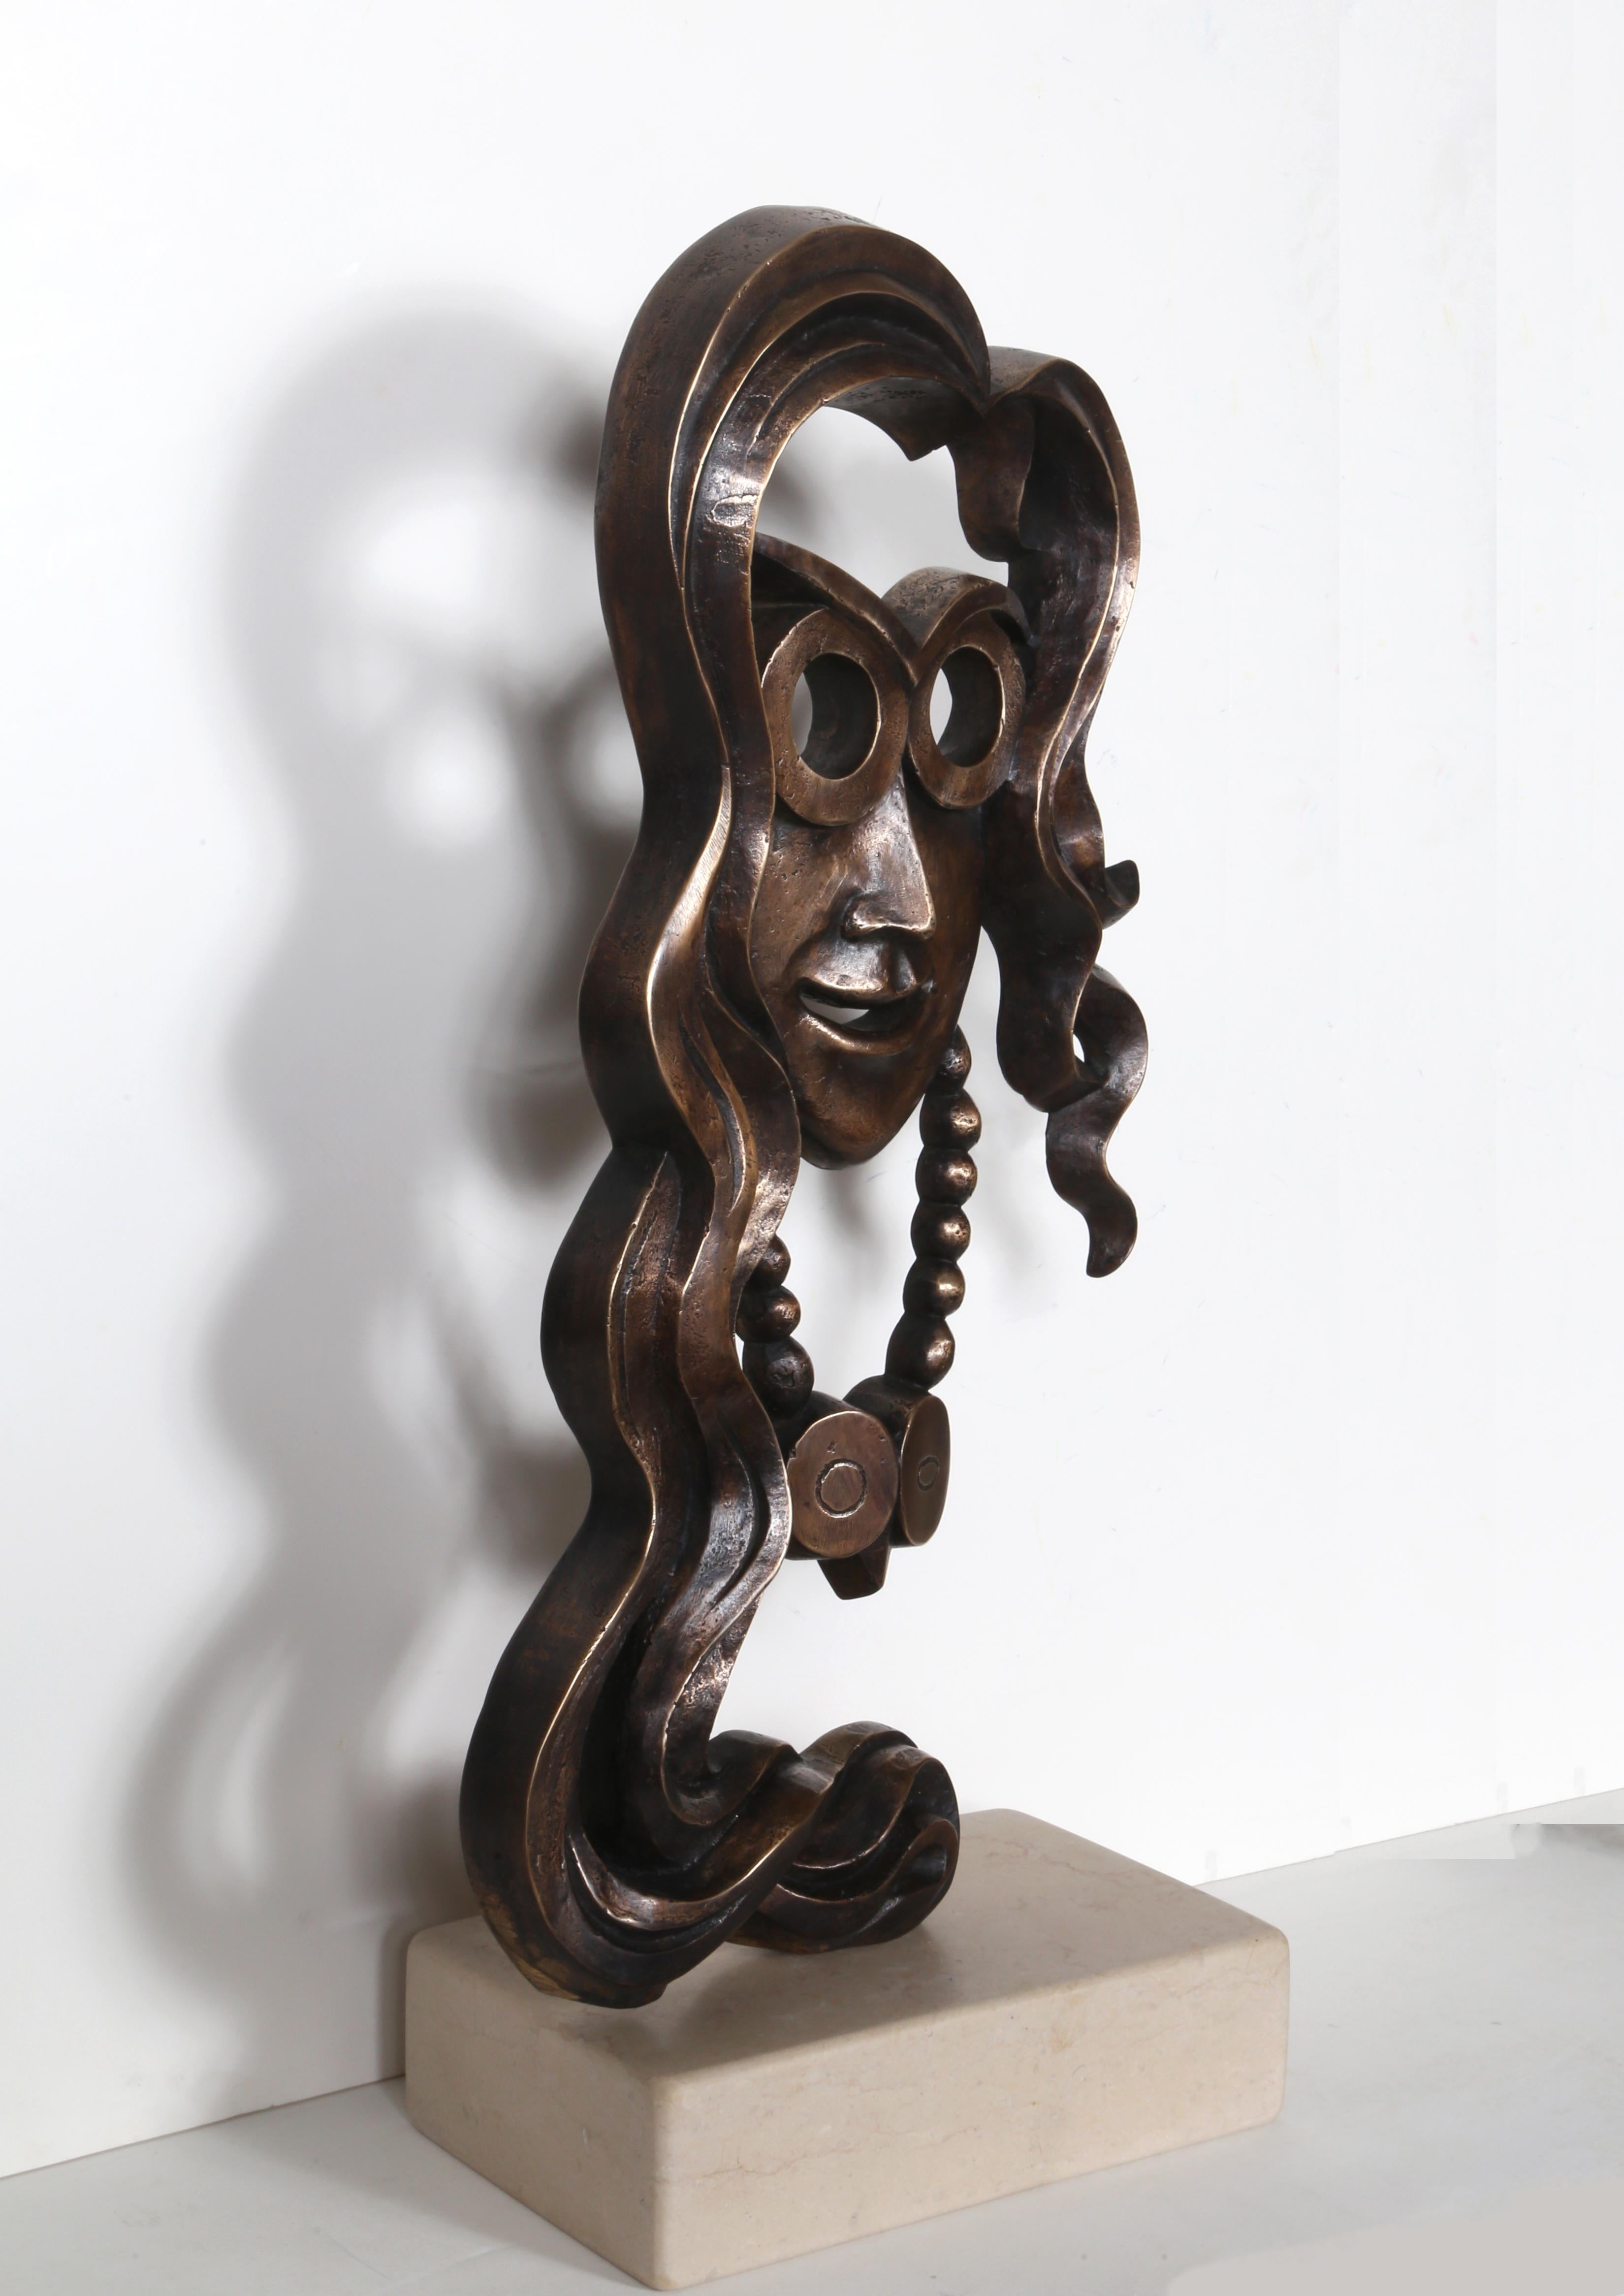 Artist: Constantin Antonovici, Romanian (1911 - 2002)
Title: Hippie - Woman
Medium: Bronze Sculpture, signature, date inscribed
Size: 21 x 11 x 1.25 in. (53.34 x 27.94 x 3.18 cm)
Marble Base: 2.5 x 9.5 x 6 inches

An original bronze sculpture by